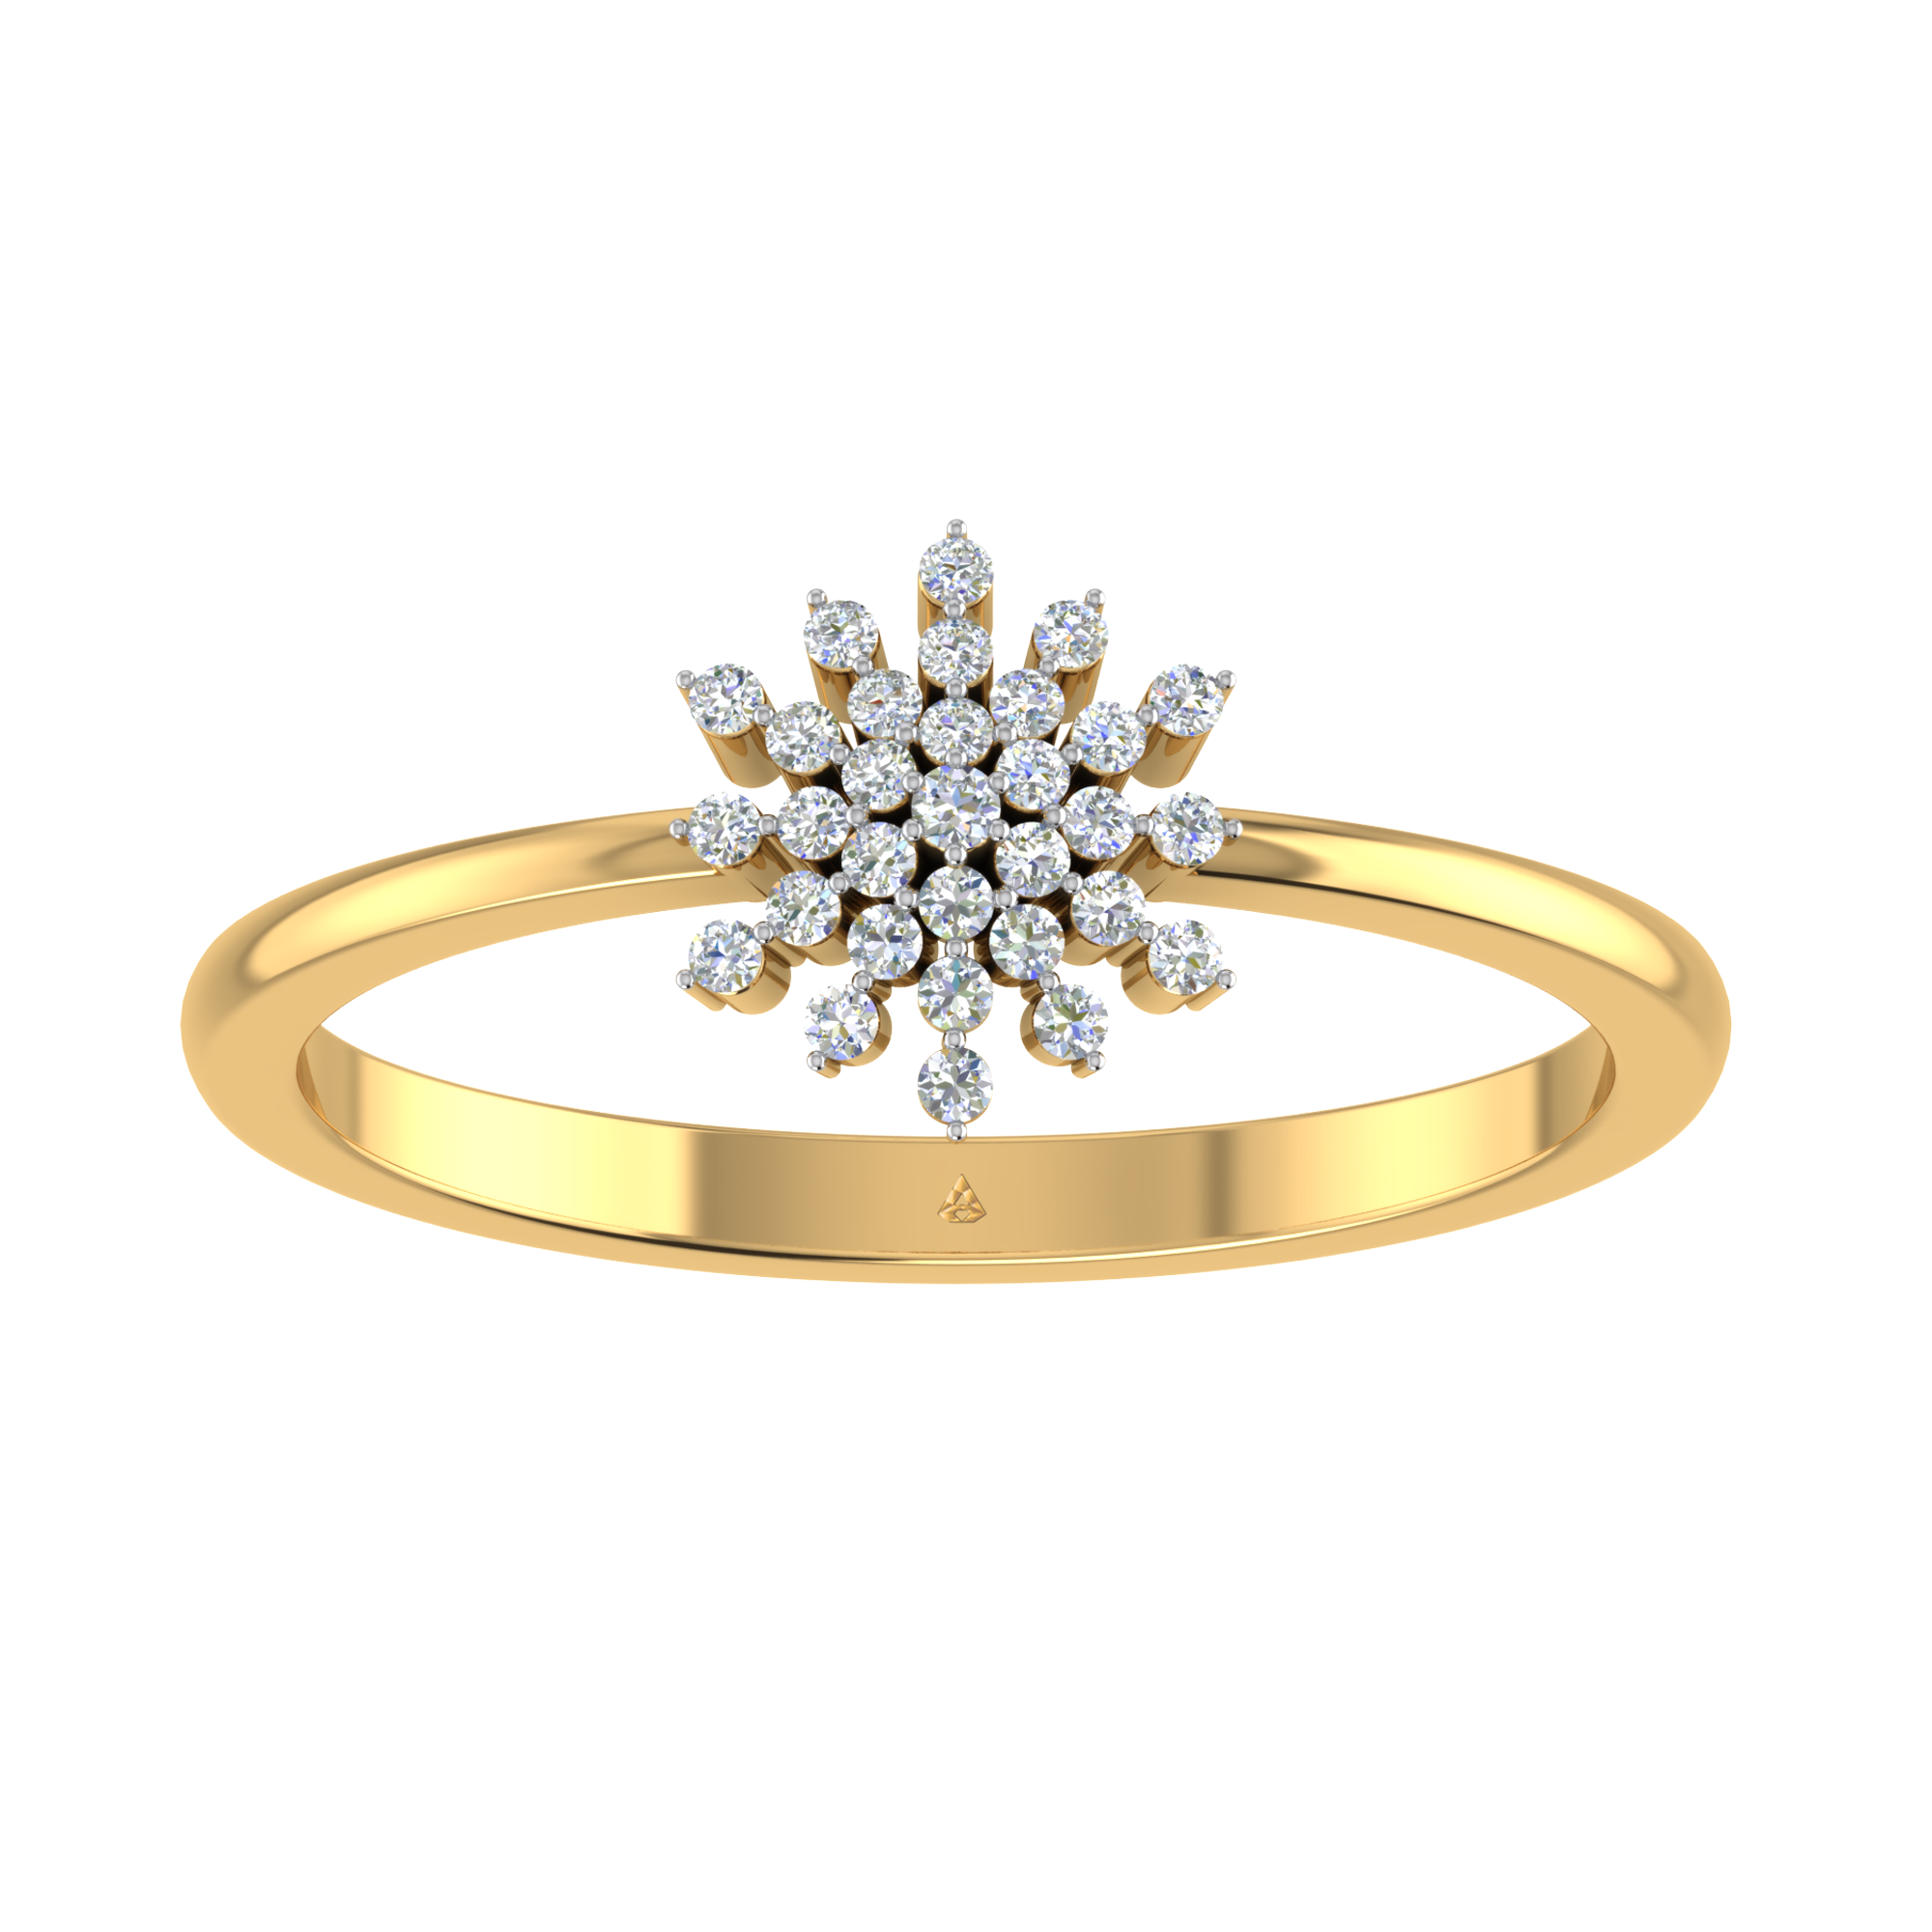 Buy Emmi Diamond Ring Online in India | Kasturi Diamond